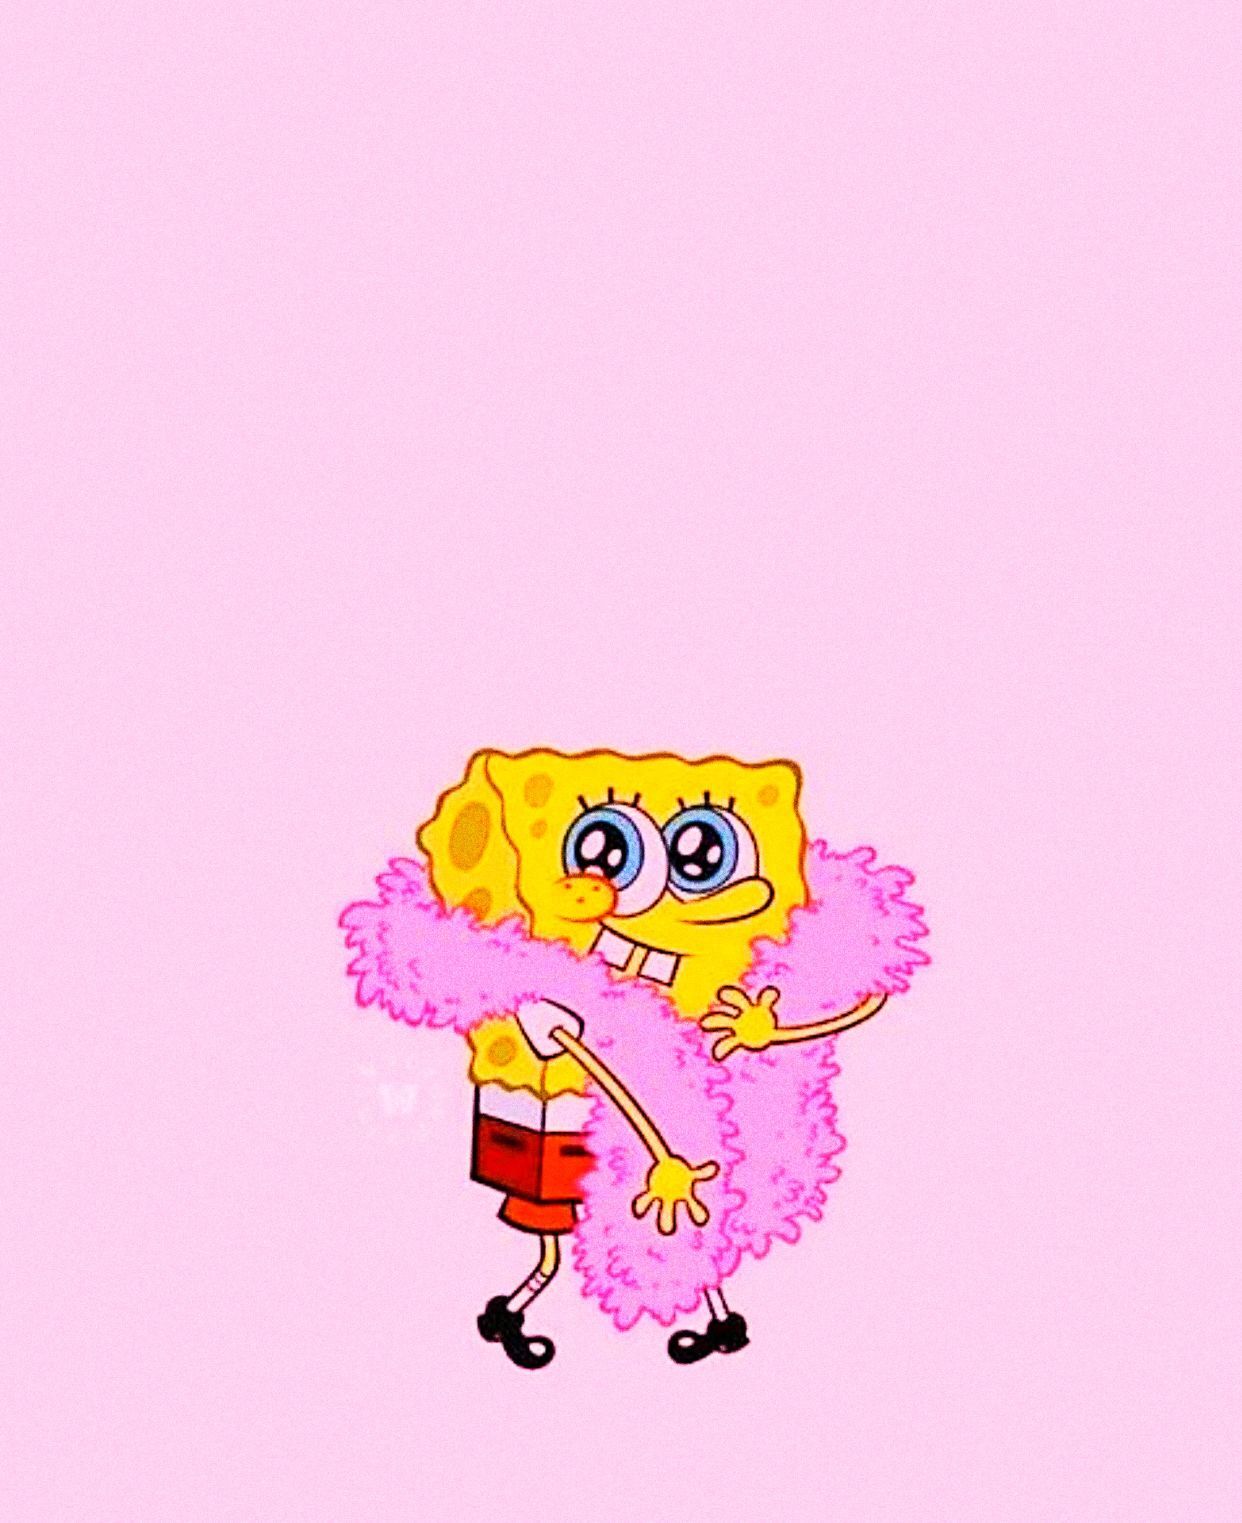 A drawing of SpongeBob SquarePants wearing a pink boa and pink shoes. - SpongeBob